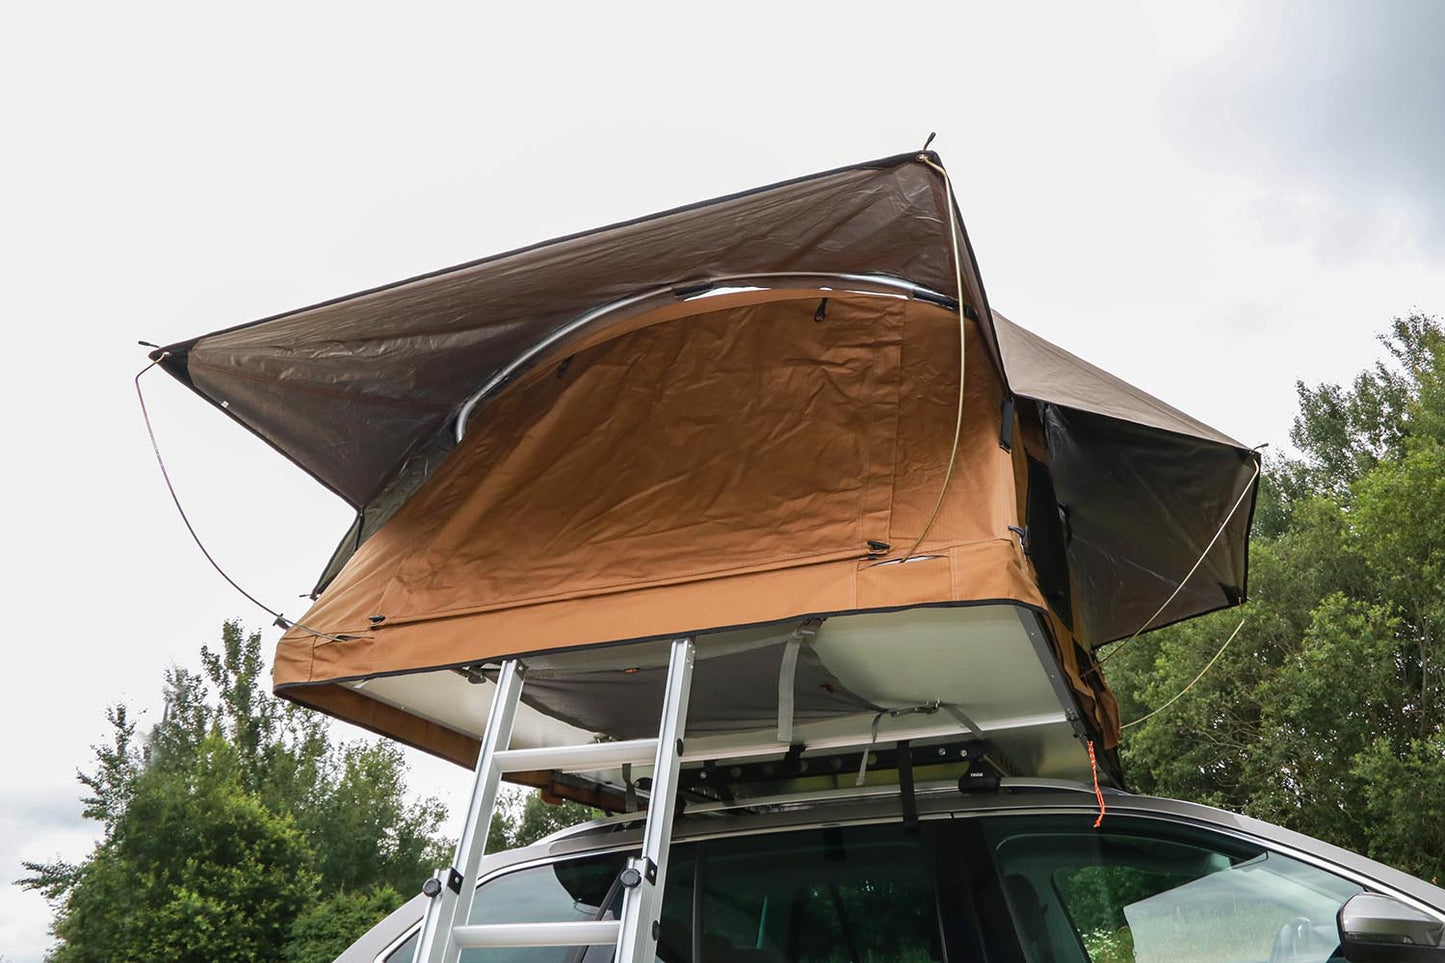 Nakatanenga Roof Lodge Evolution 2 - Dachzelt - Dirt Adventure 4x4 - Offroad Outdoor Camping